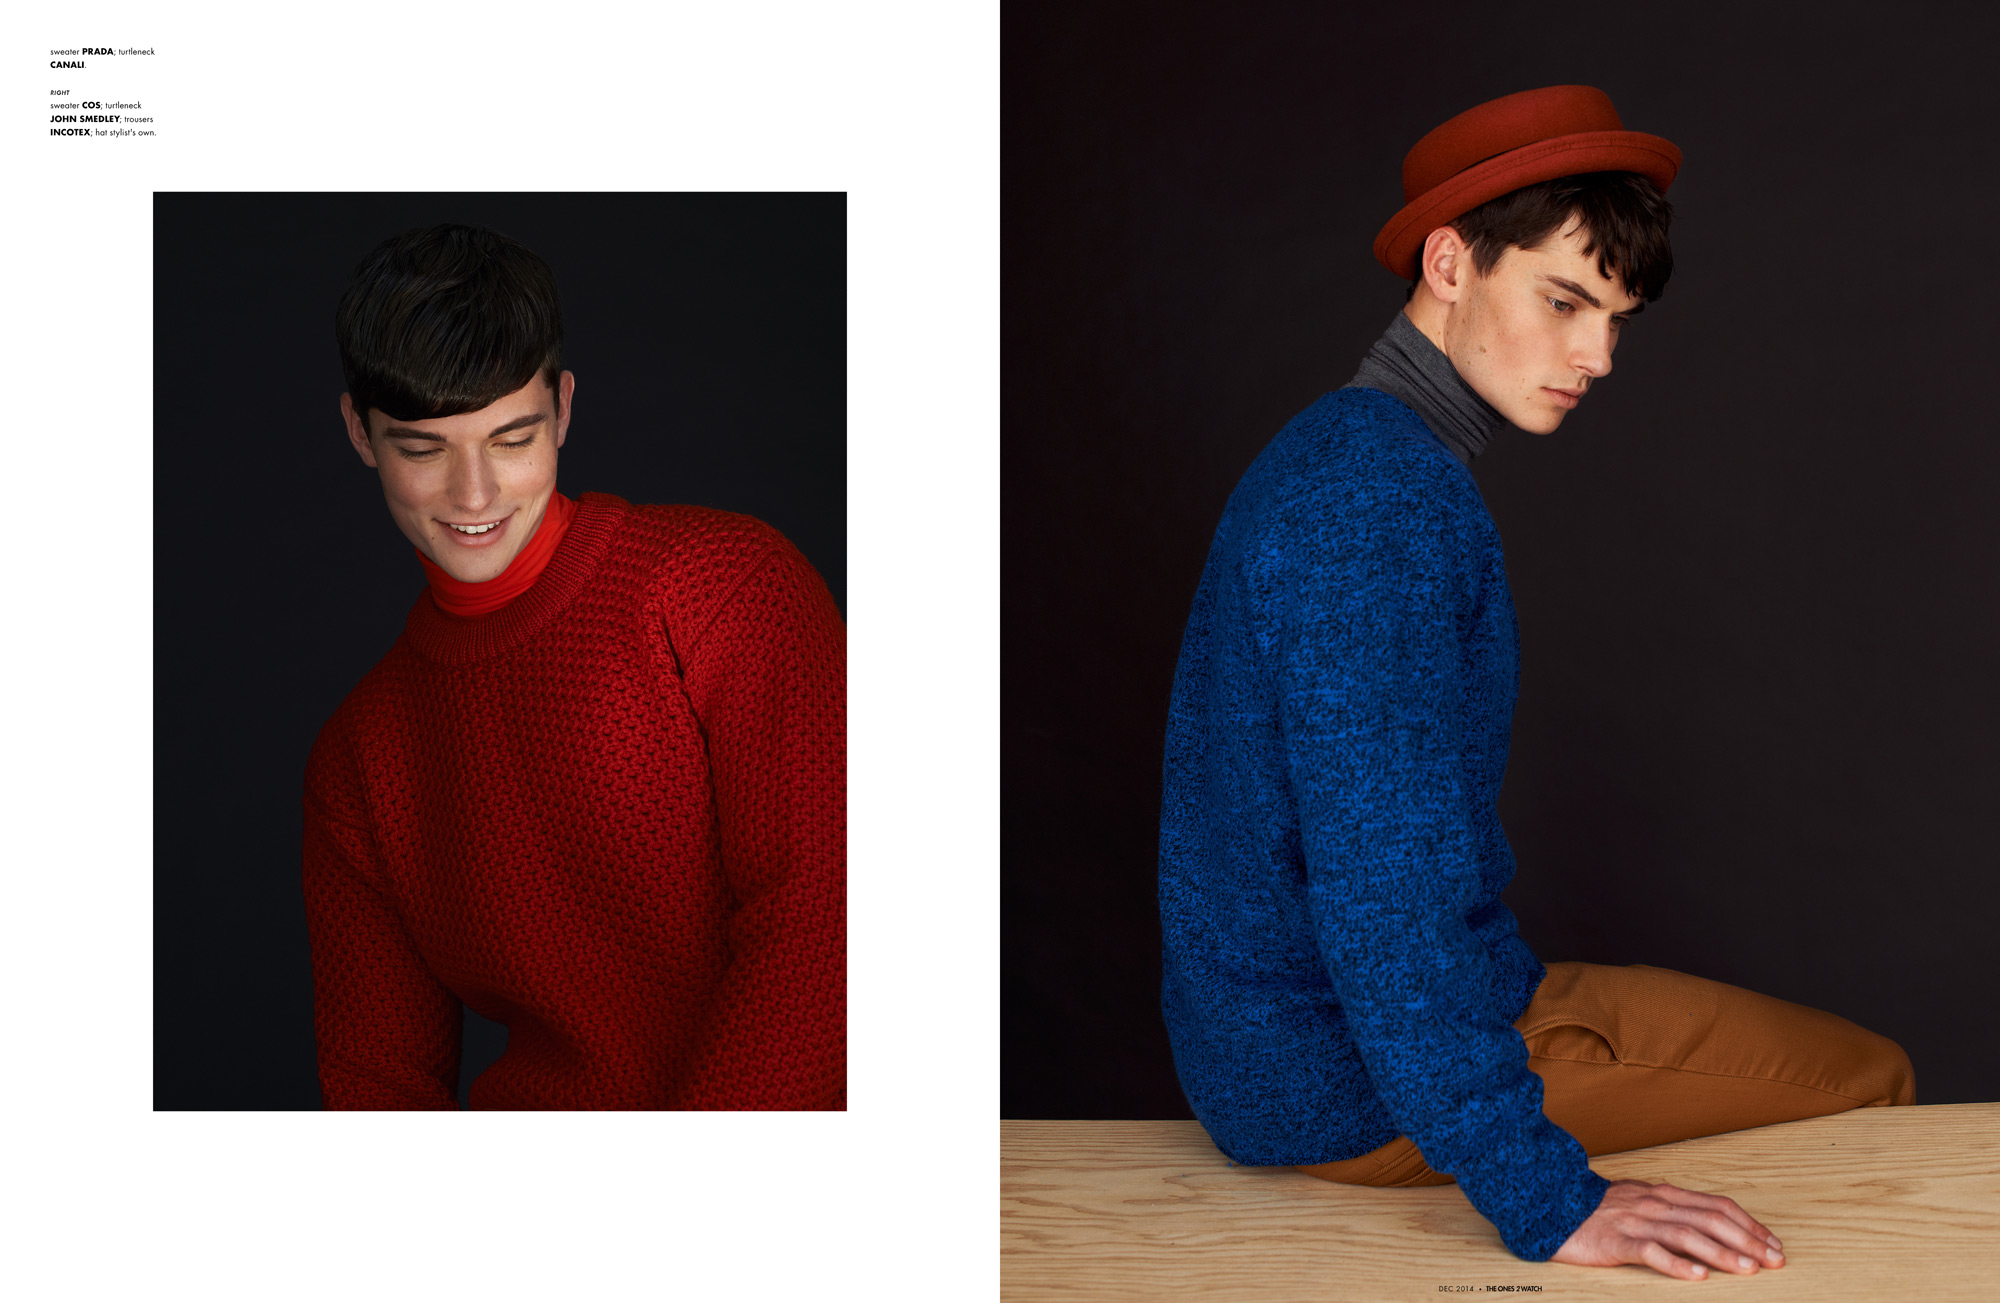 sweater PRADA; turtleneck CANALI. right: sweater COS; turtleneck JOHN SMEDLEY; trousers INCOTEX; hat stylist's own.